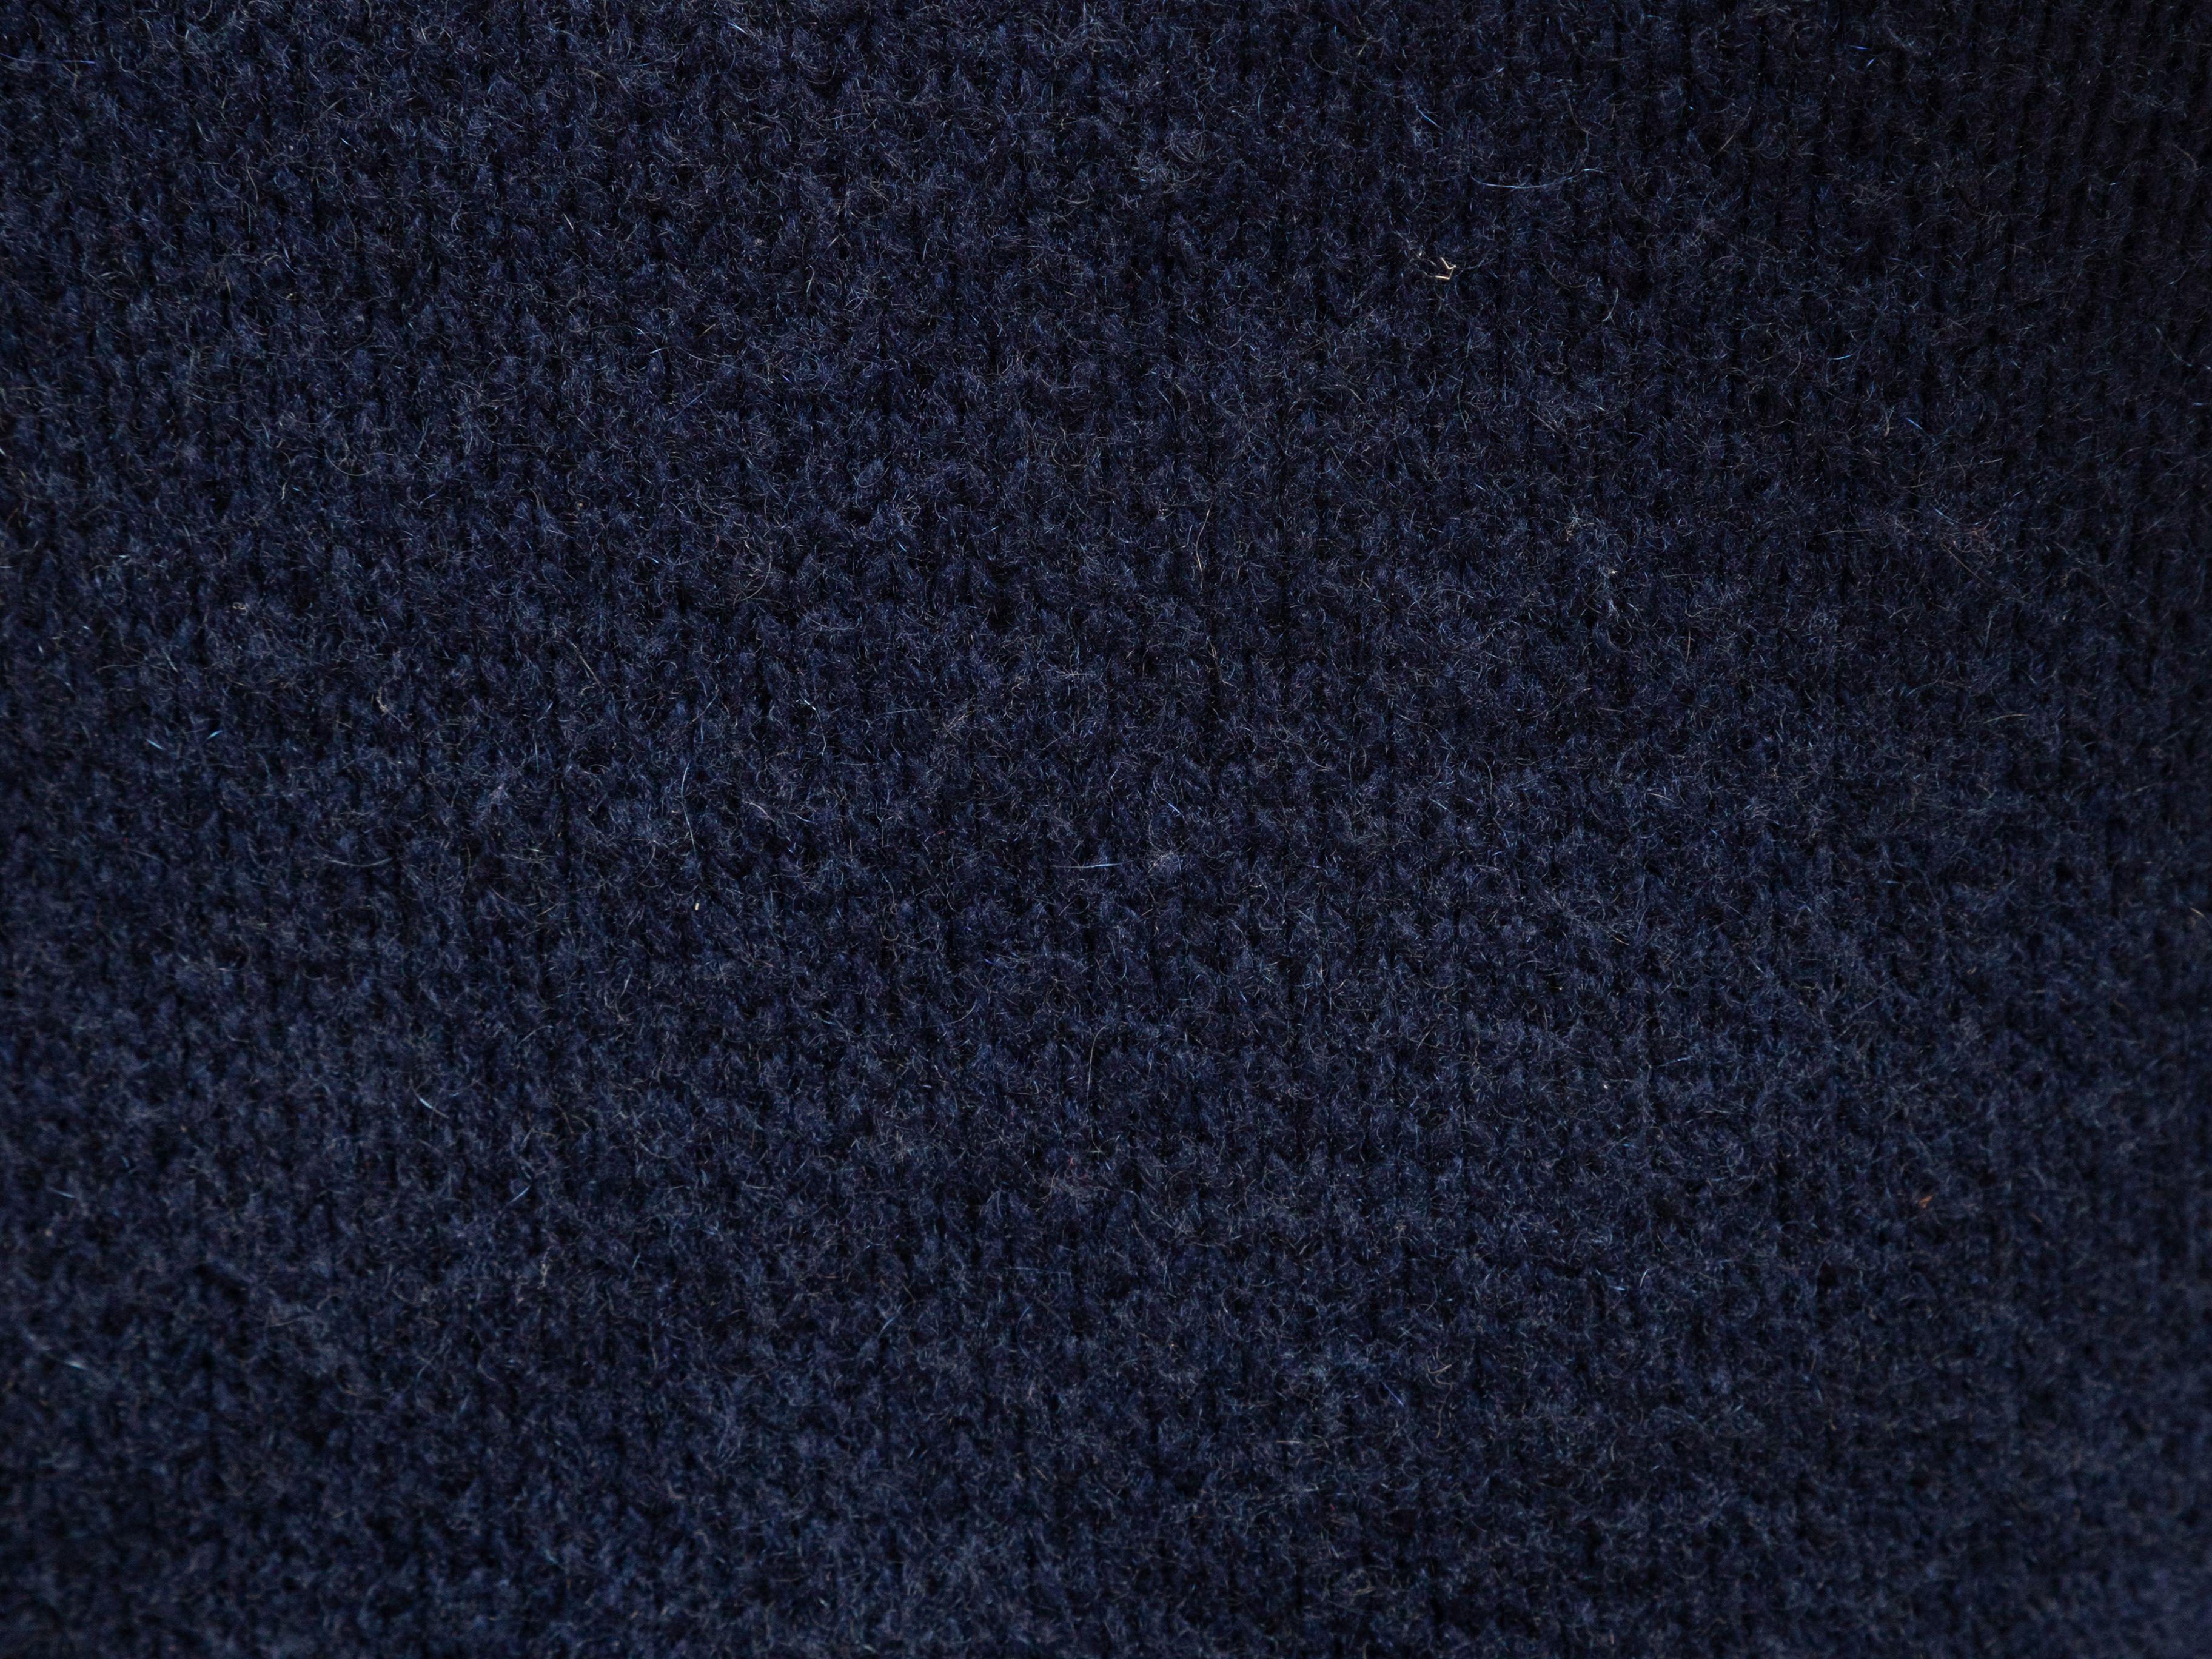 Women's Yves Saint Laurent Navy Cashmere Turtleneck Sweater